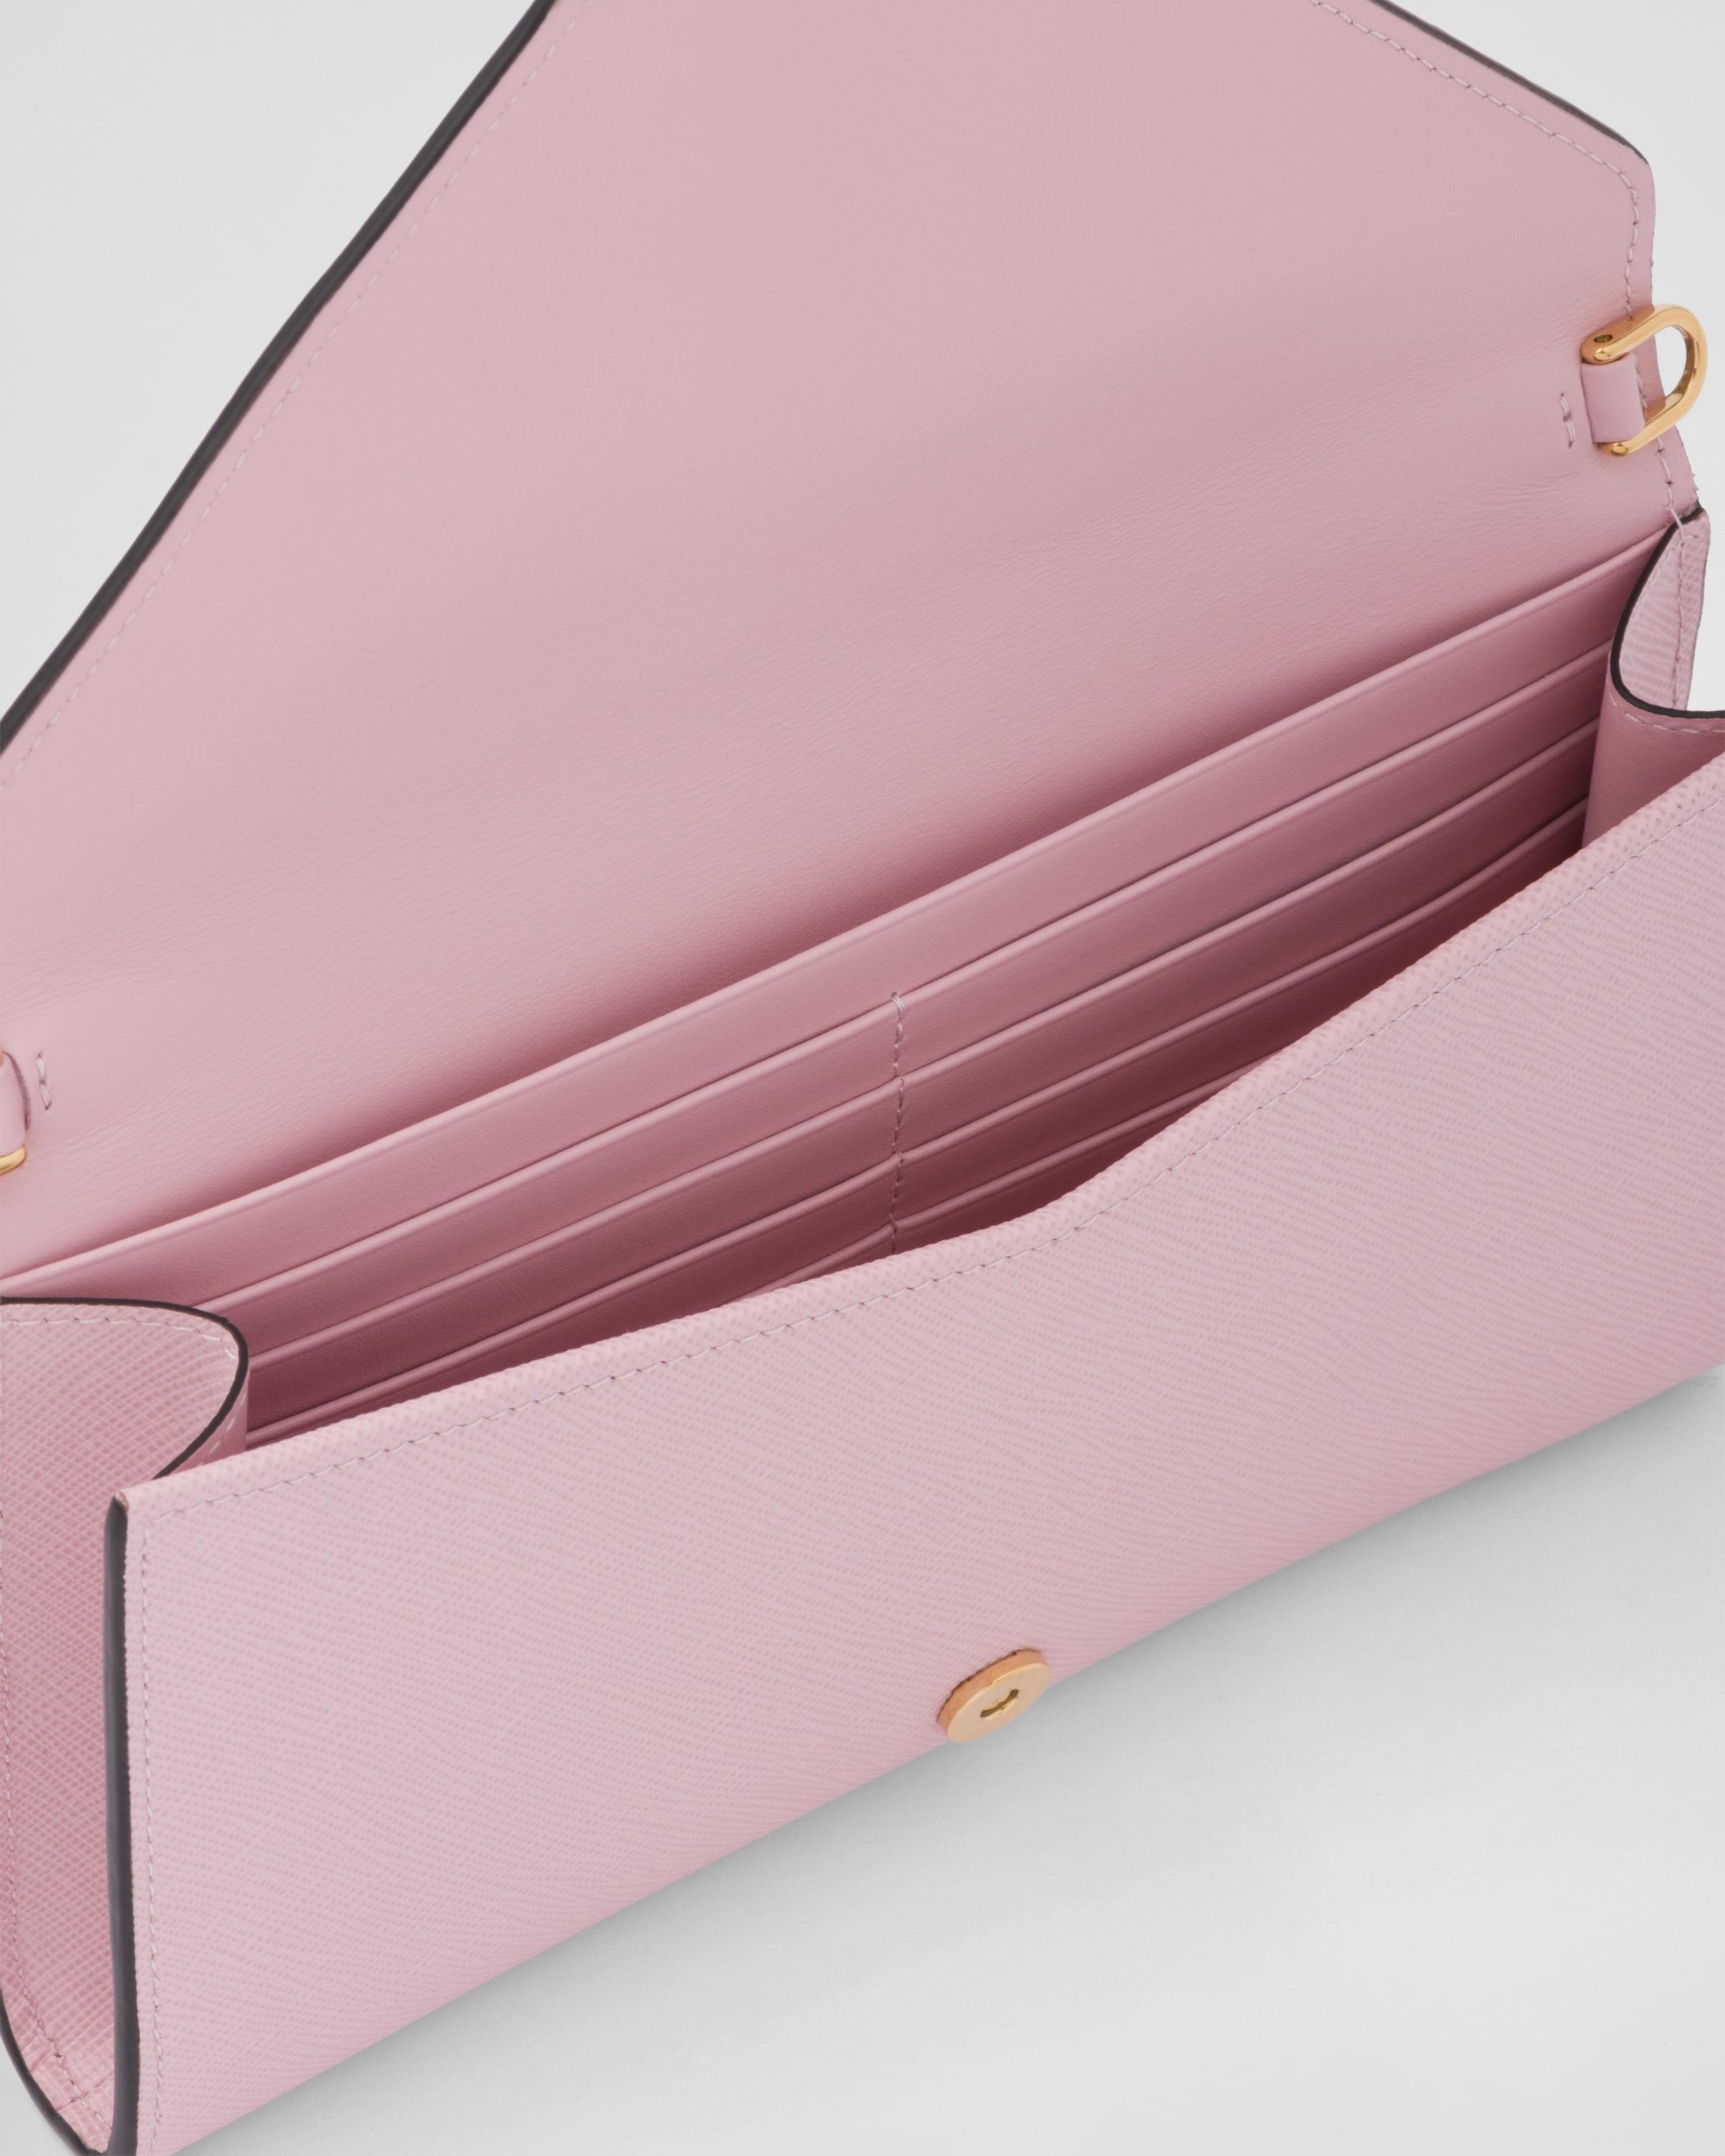 Prada Saffiano Leather Mini Envelope Bag Pink